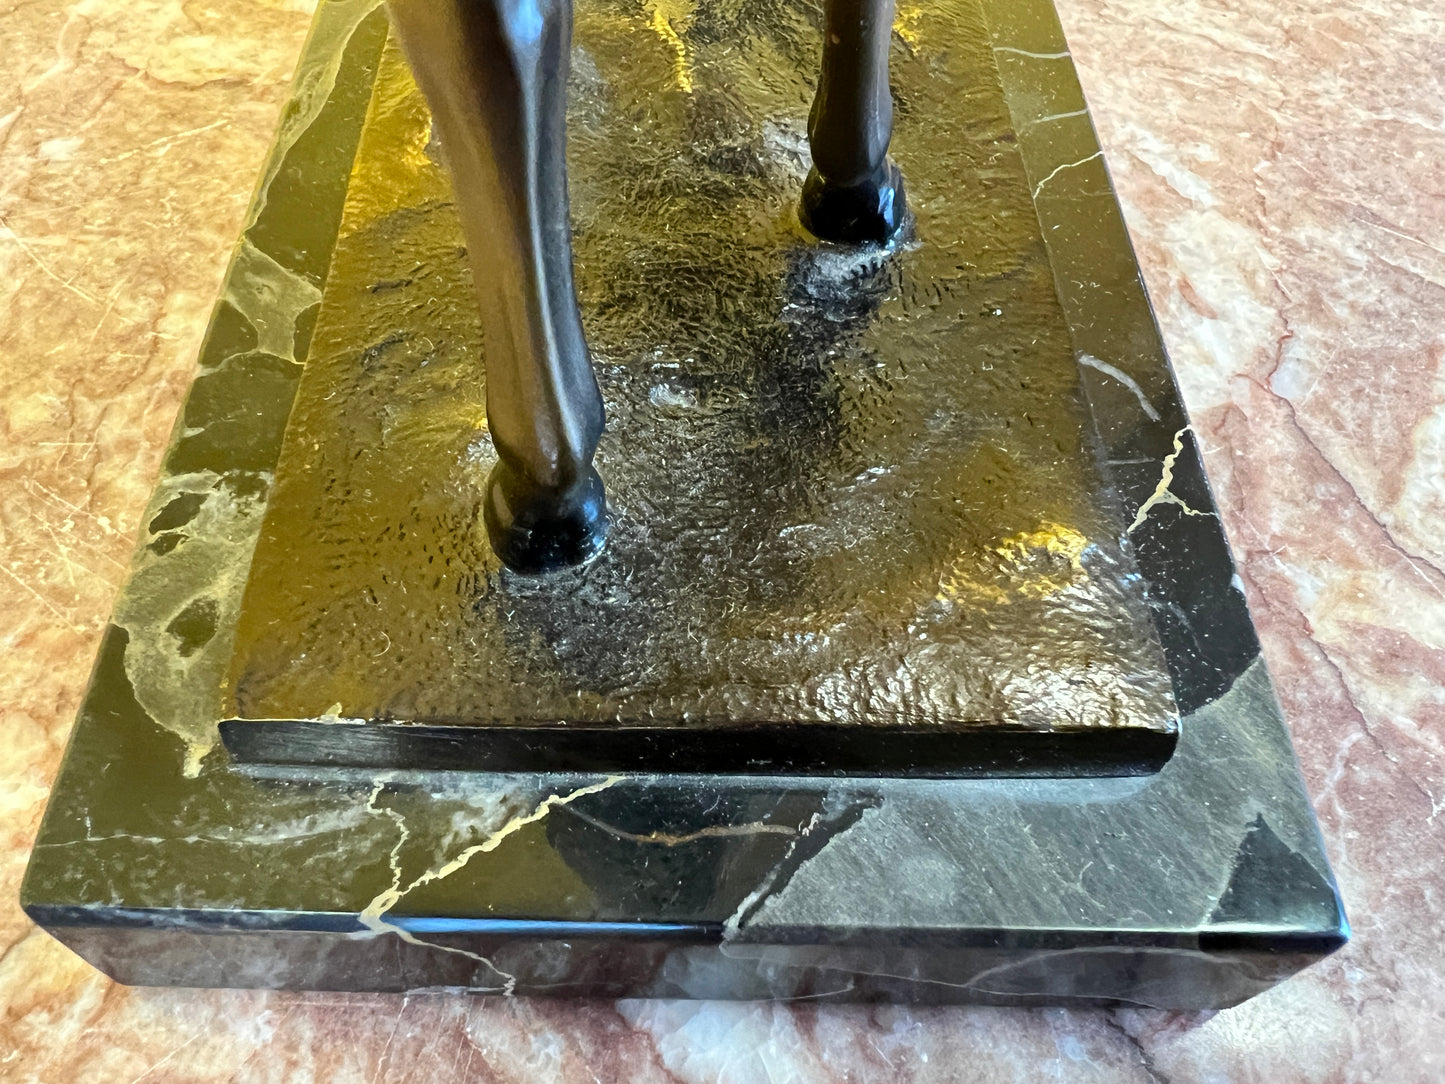 Anmut in Bronze: Jugendstil Pferd Figur